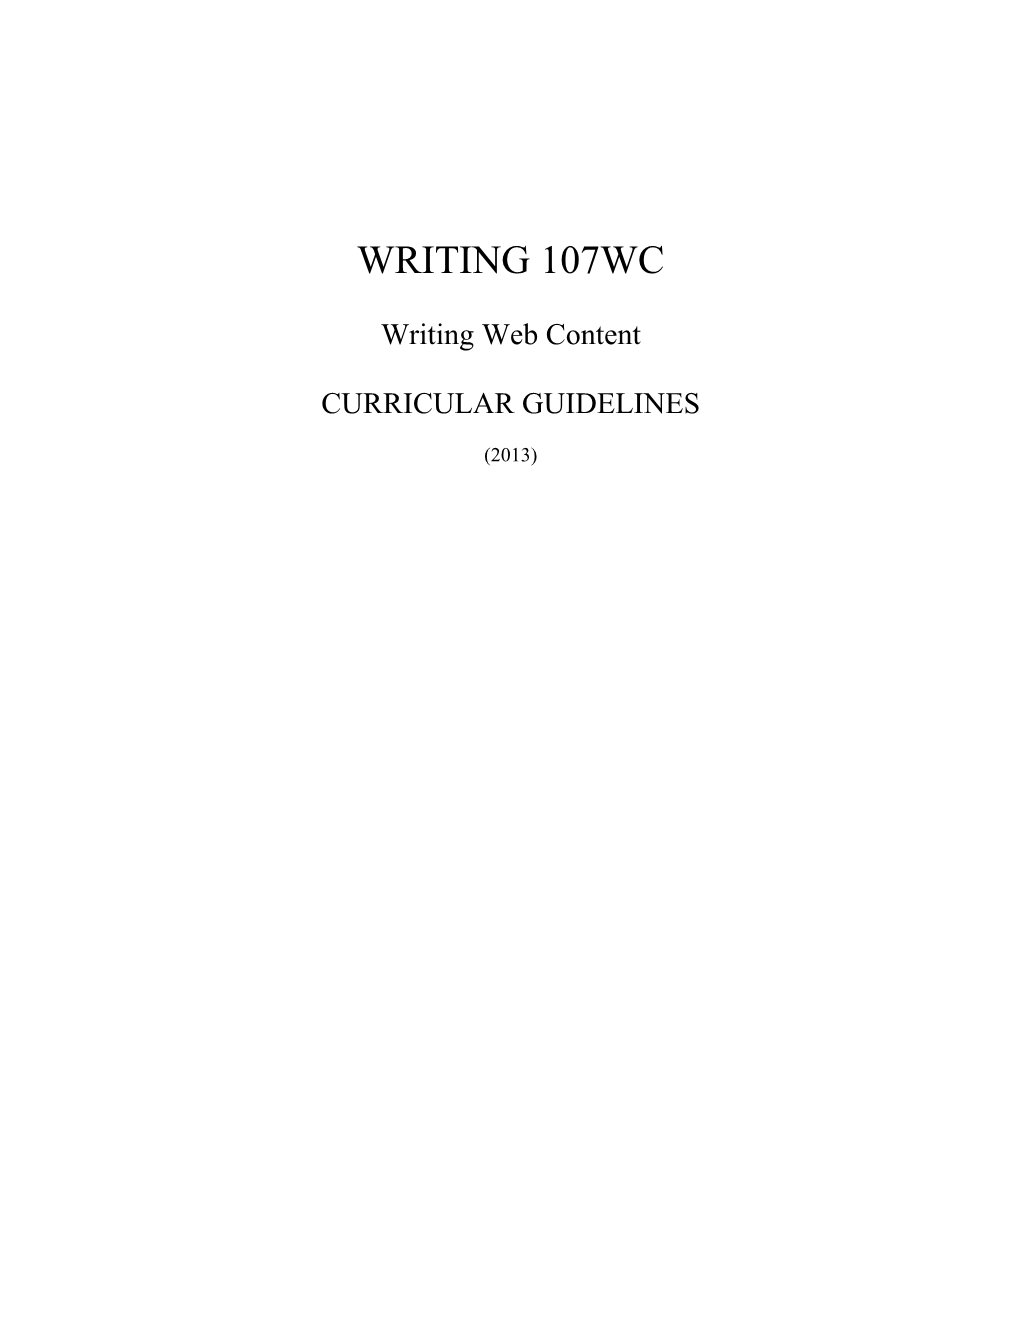 Writing 107WC: Writing Web Content